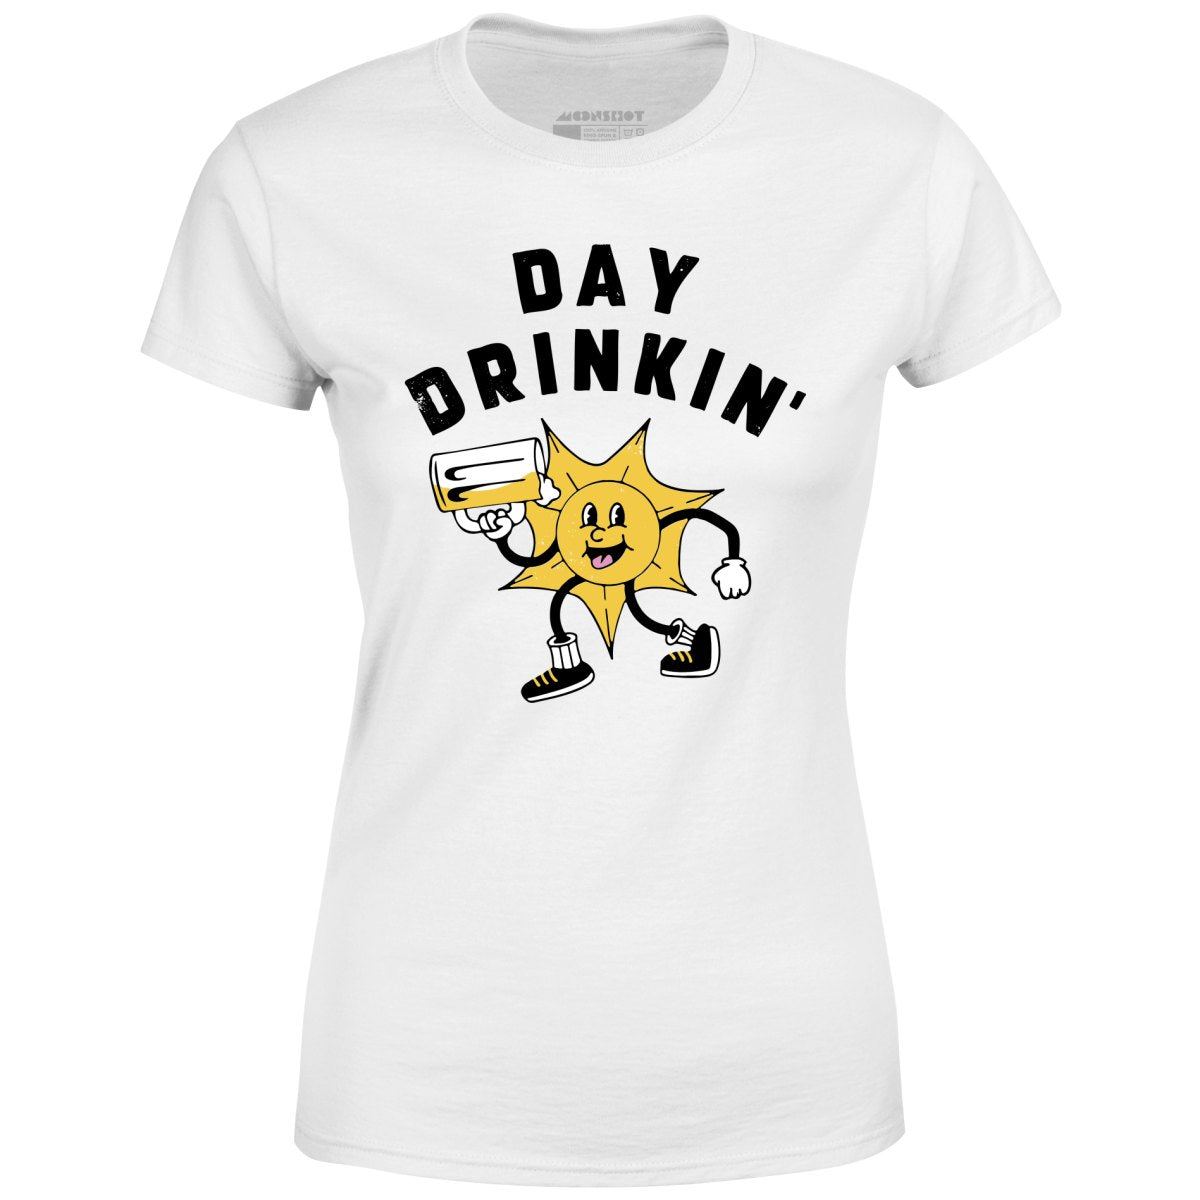 Day Drinkin' - Women's T-Shirt